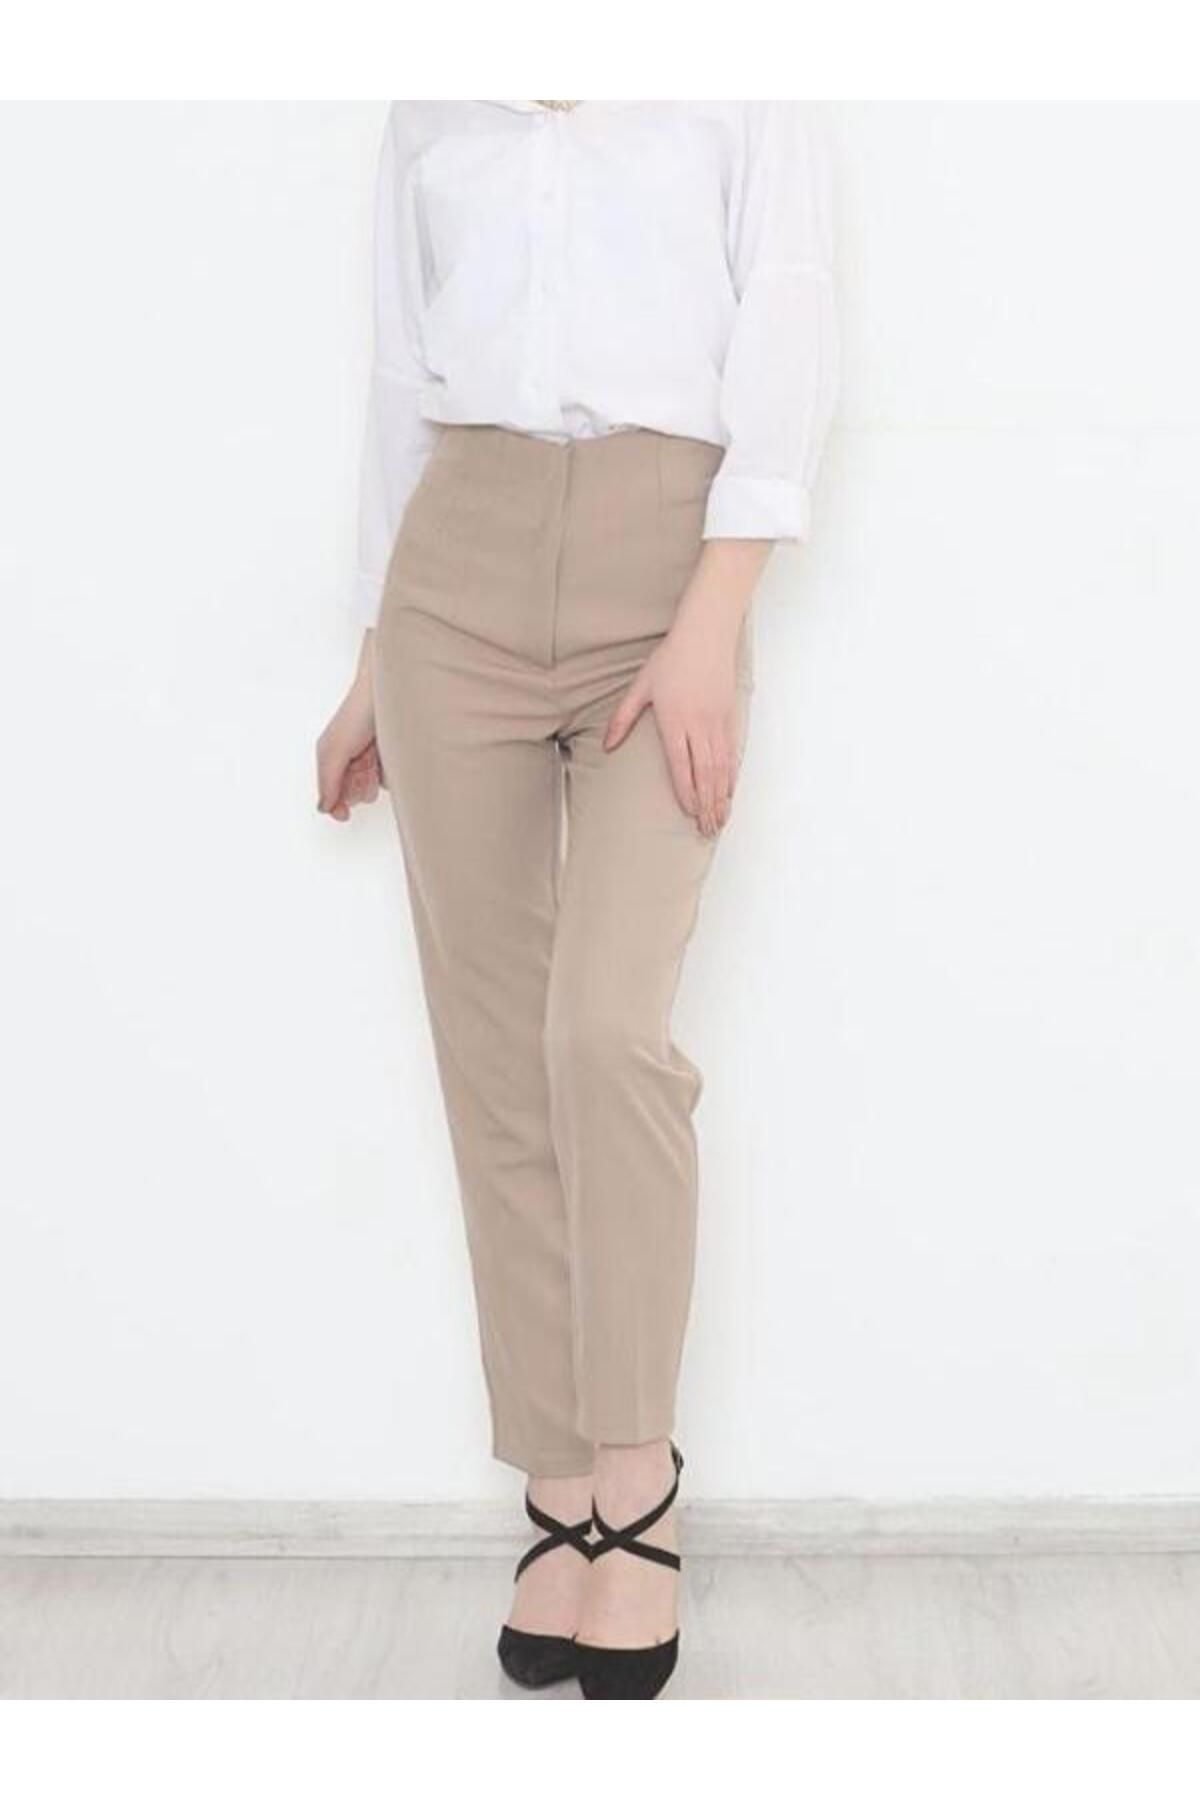 Zara Model Ultra Yüksek Bel Pensli Deri Pantolon Vizon